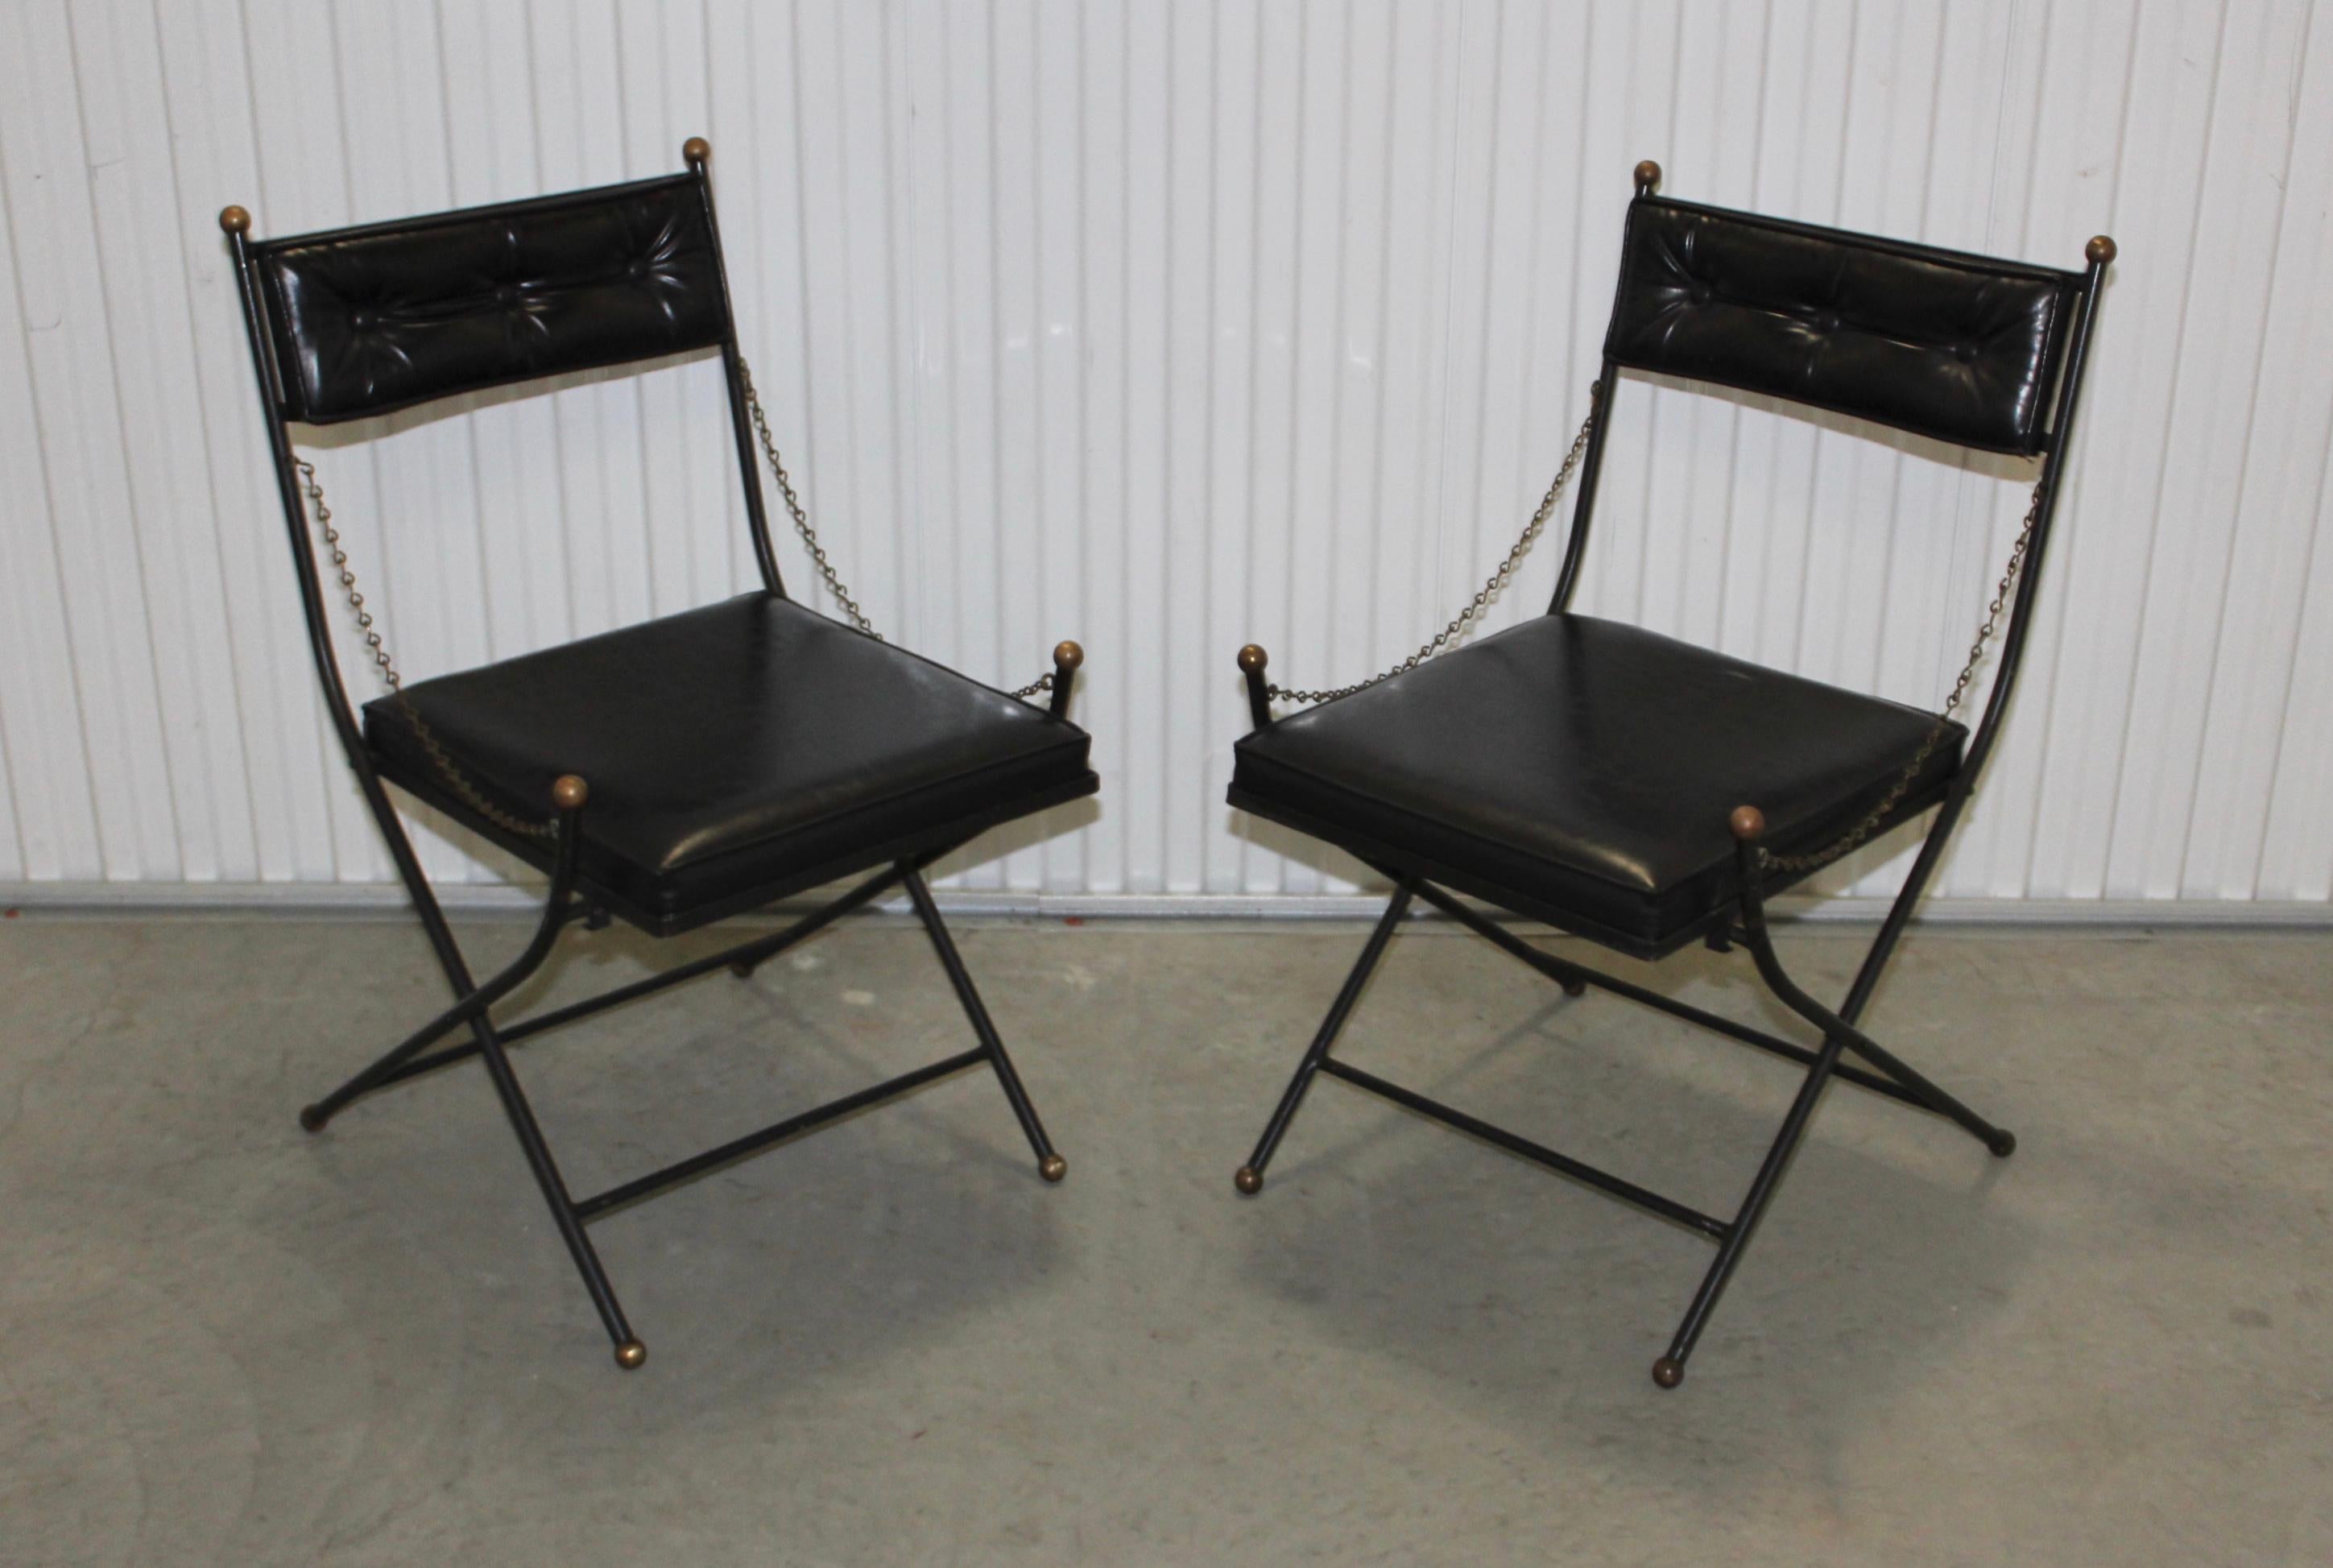 1950s folding chairs